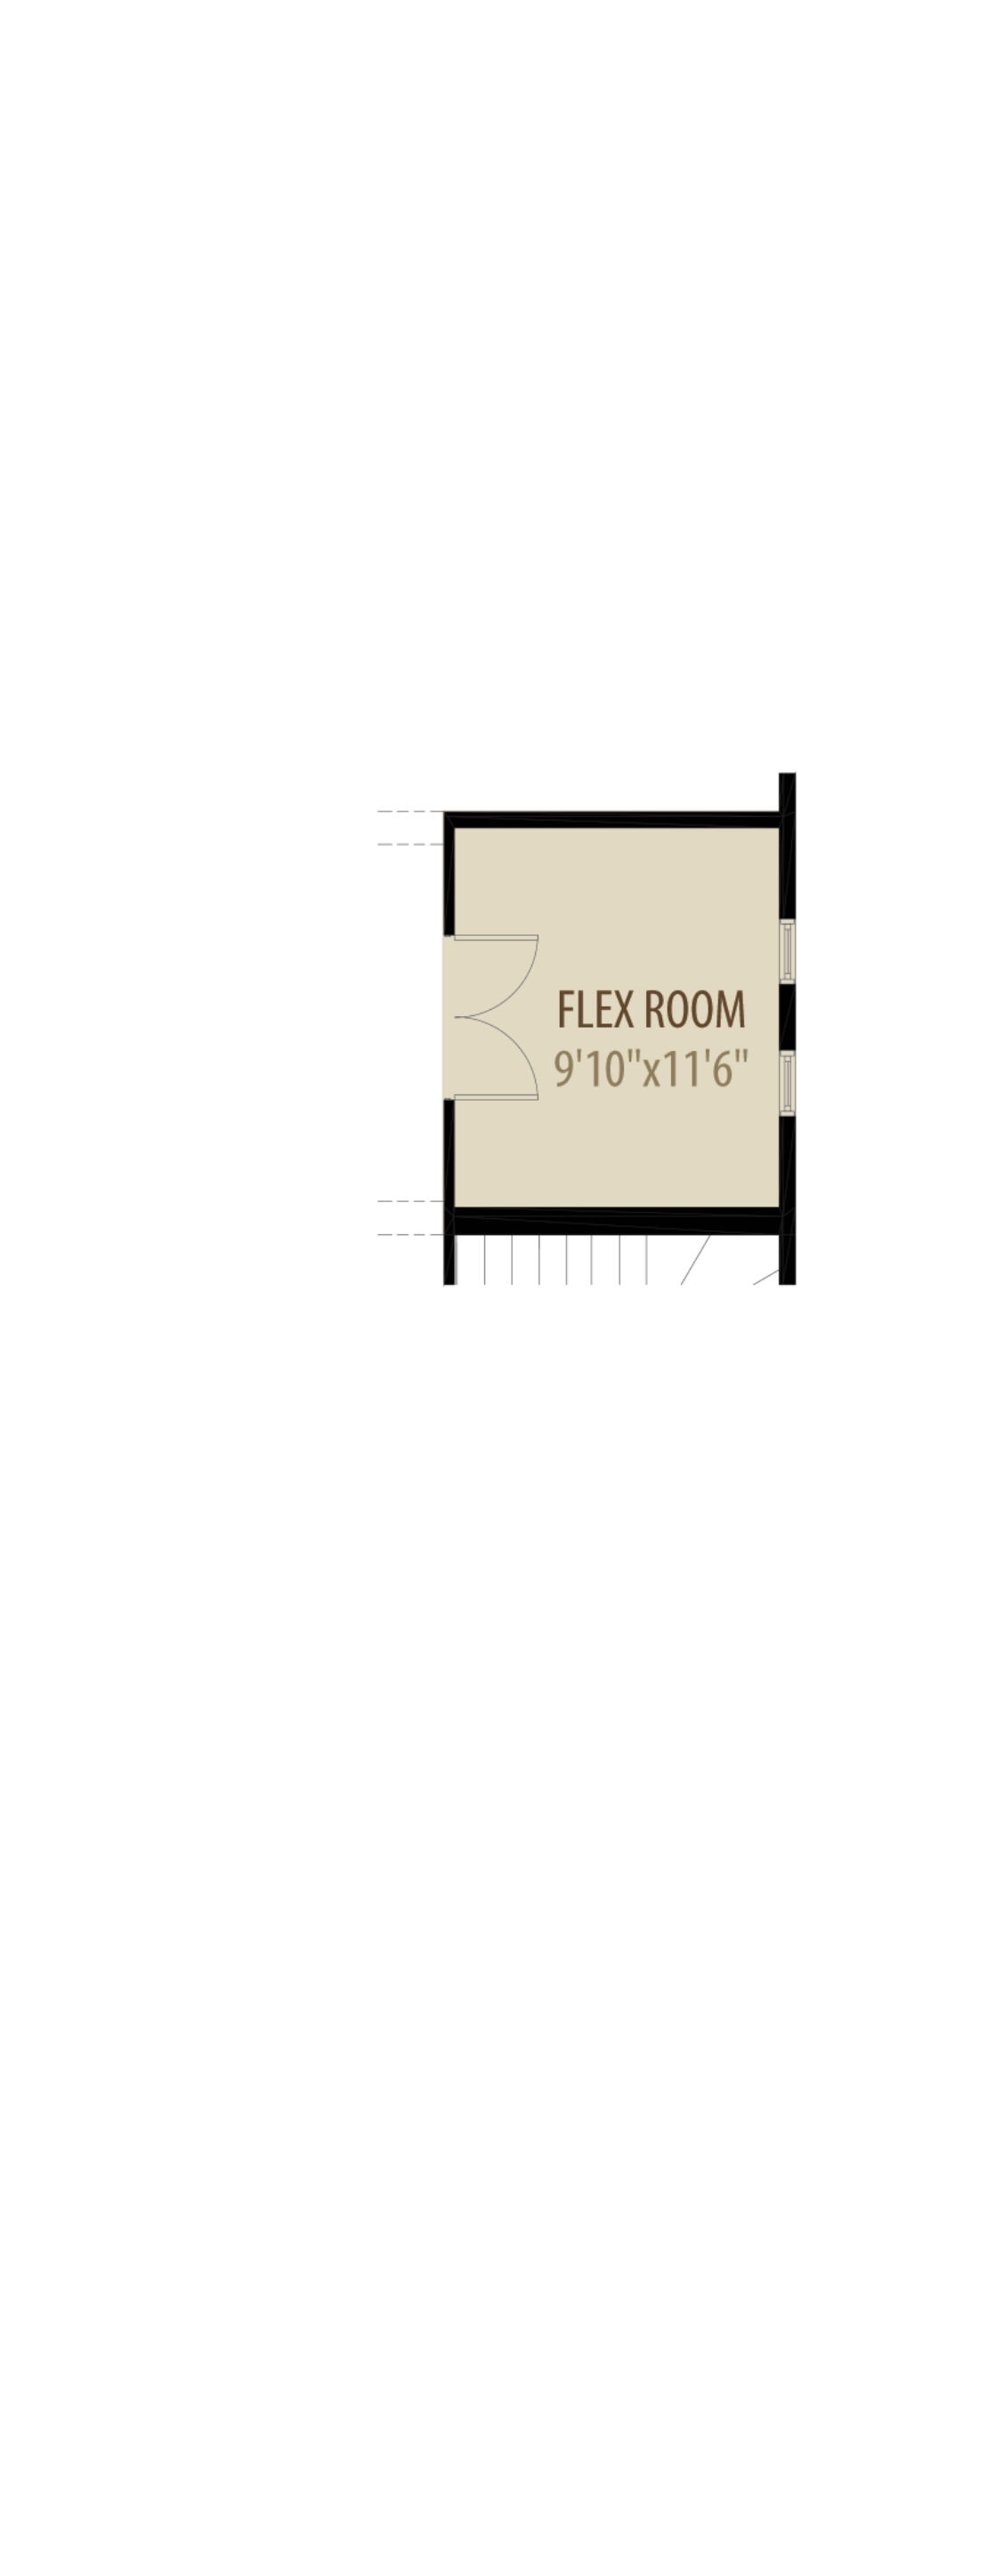 Enclosed Flex Room